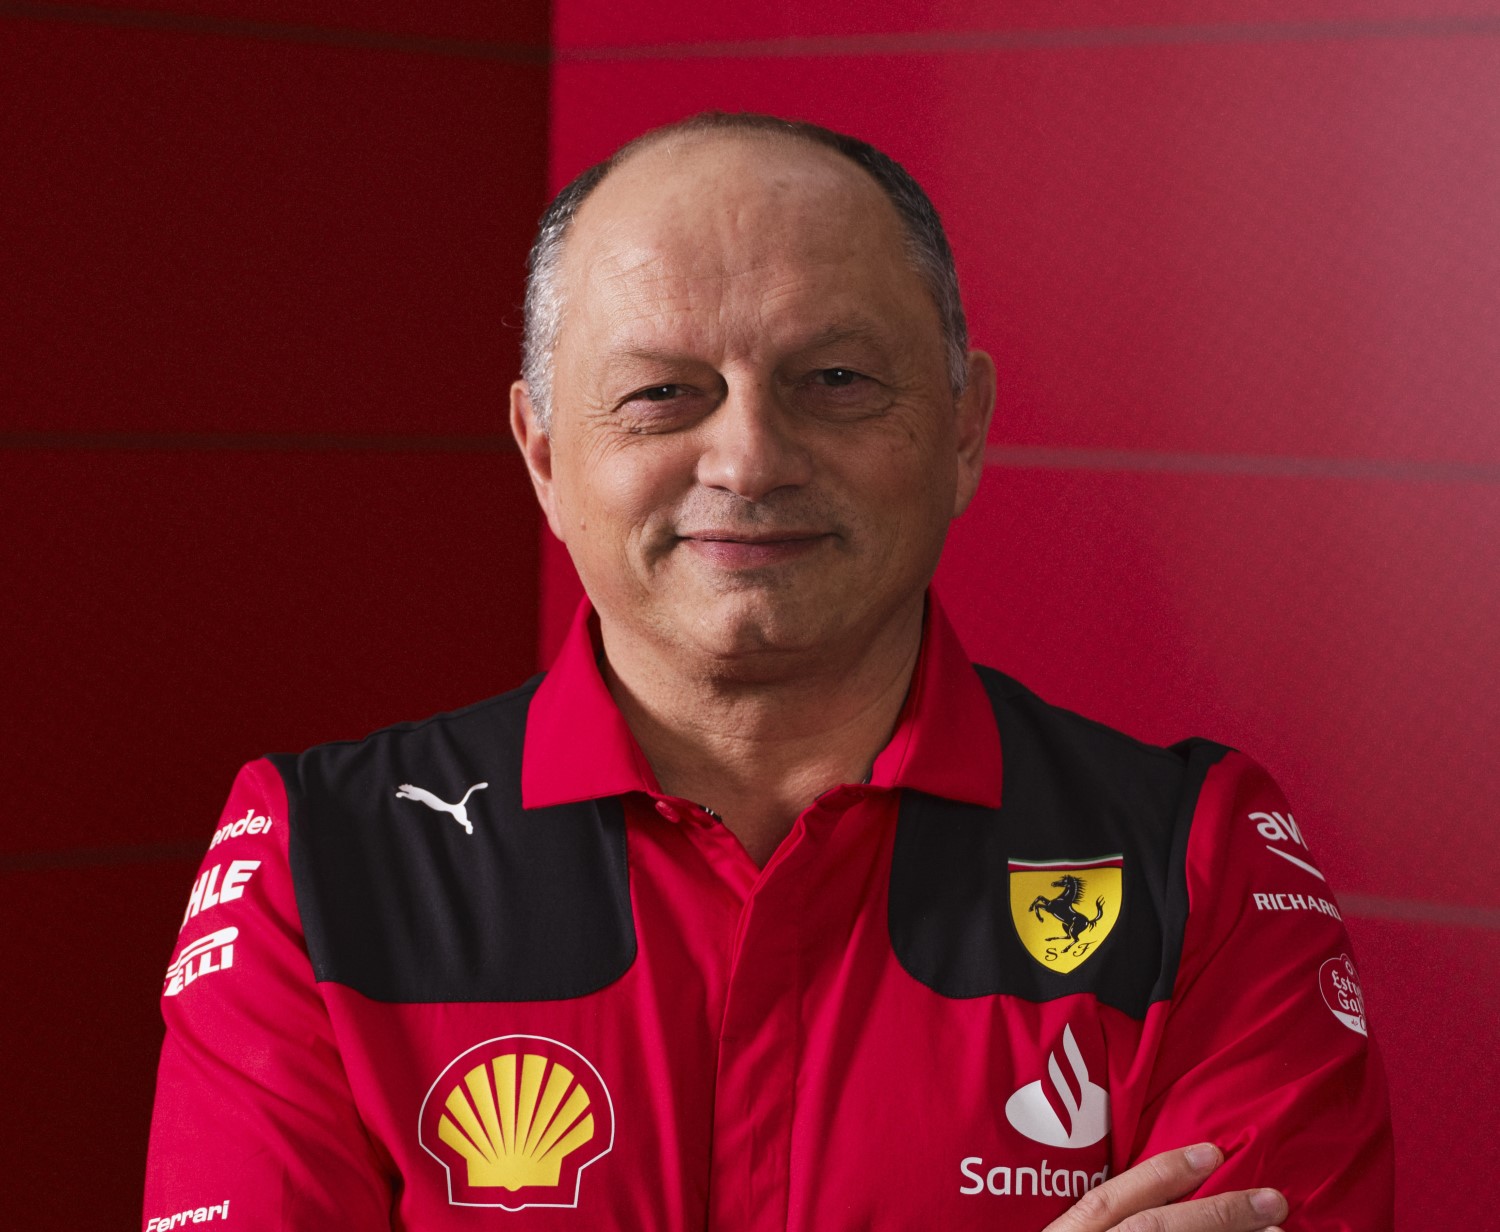 F1: Vasseur tipped to succeed as Ferrari boss - AutoRacing1.com